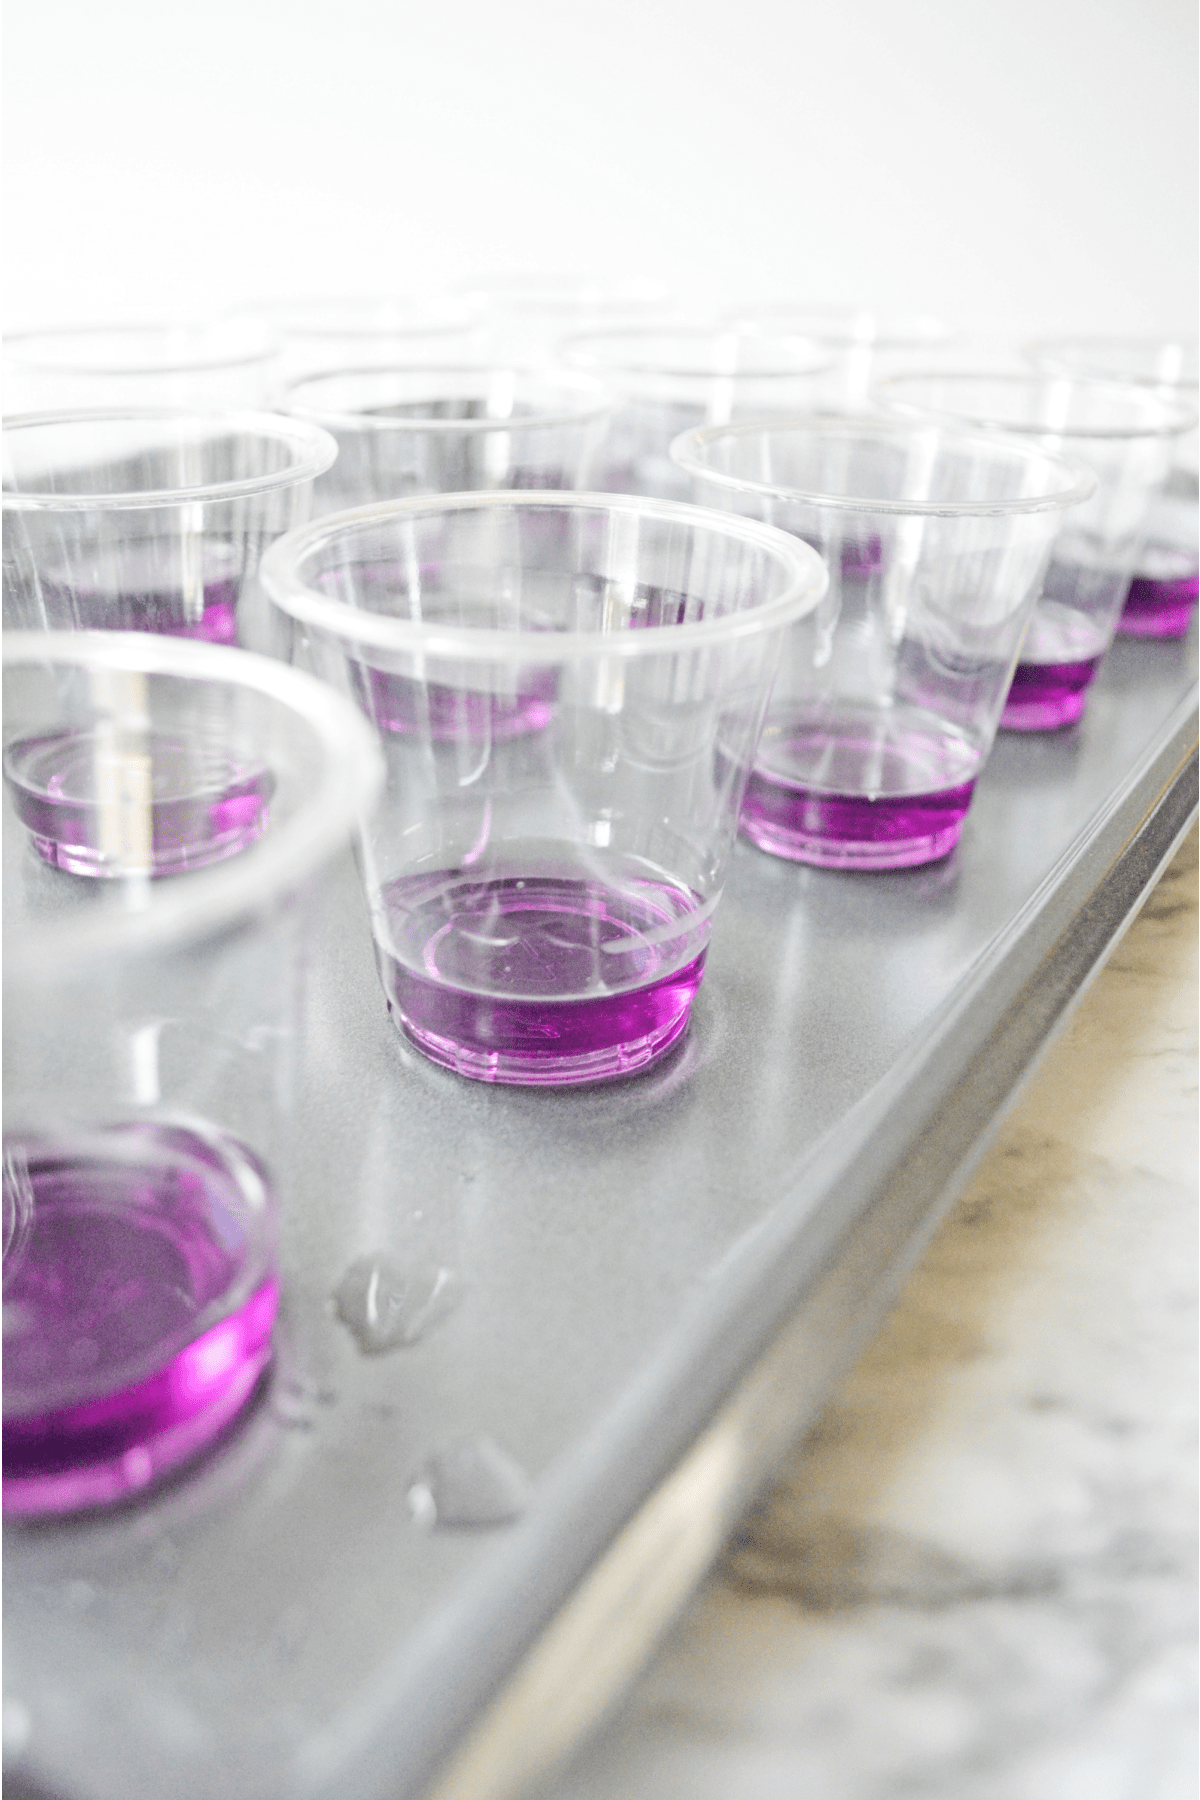 Jellos shot cups with purple layer of jello